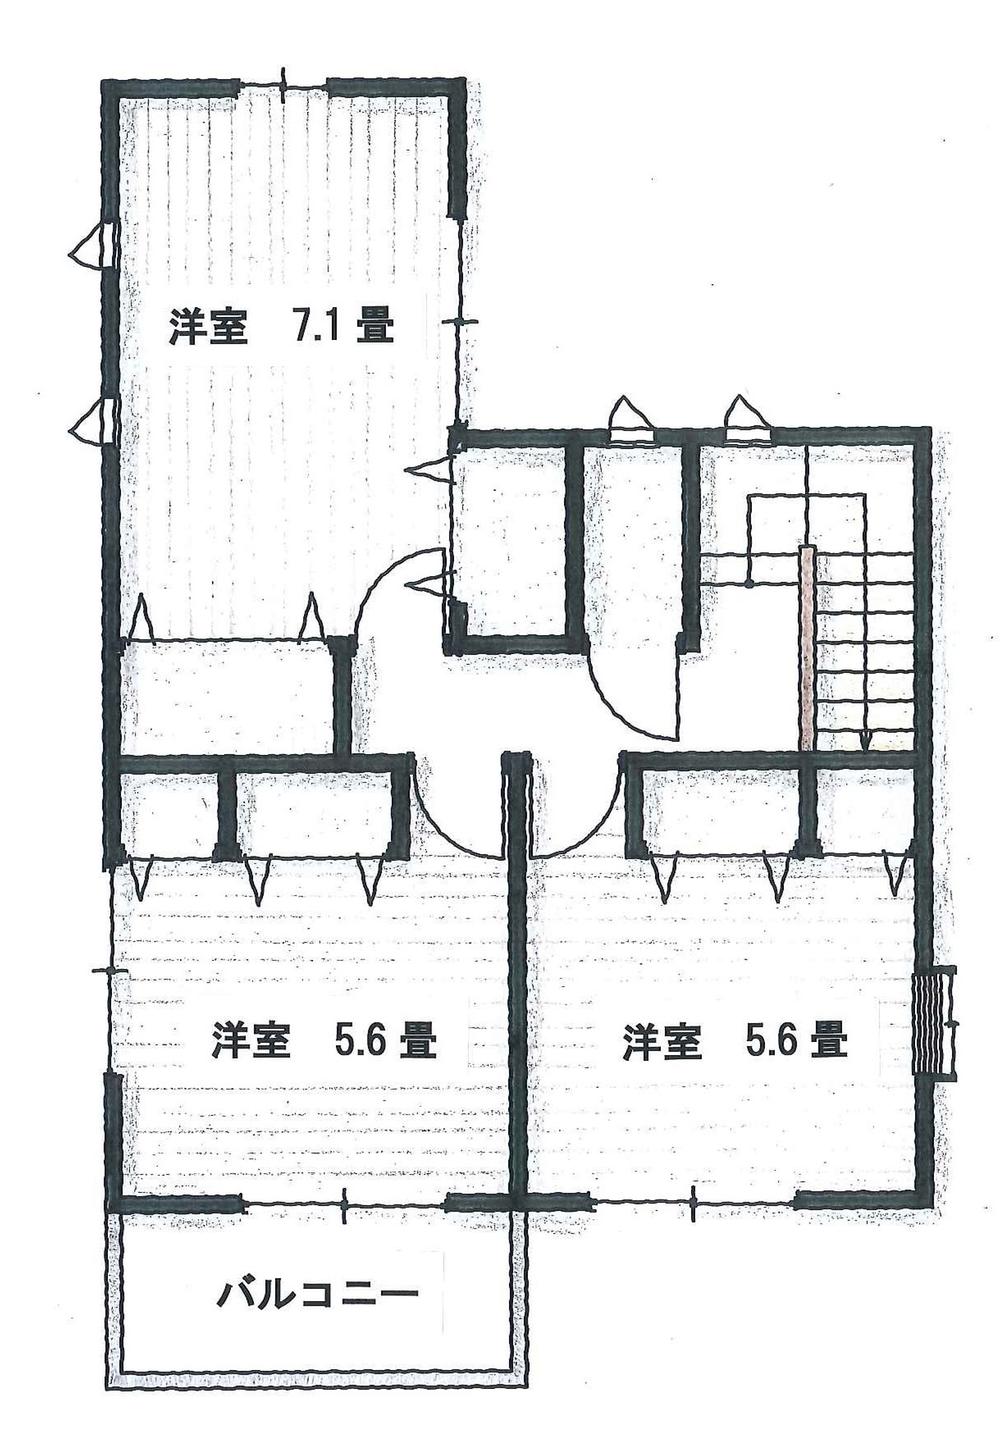 Floor plan. 29,800,000 yen, 4LDK + S (storeroom), Land area 97 sq m , Building area 141.37 sq m 3F plan view